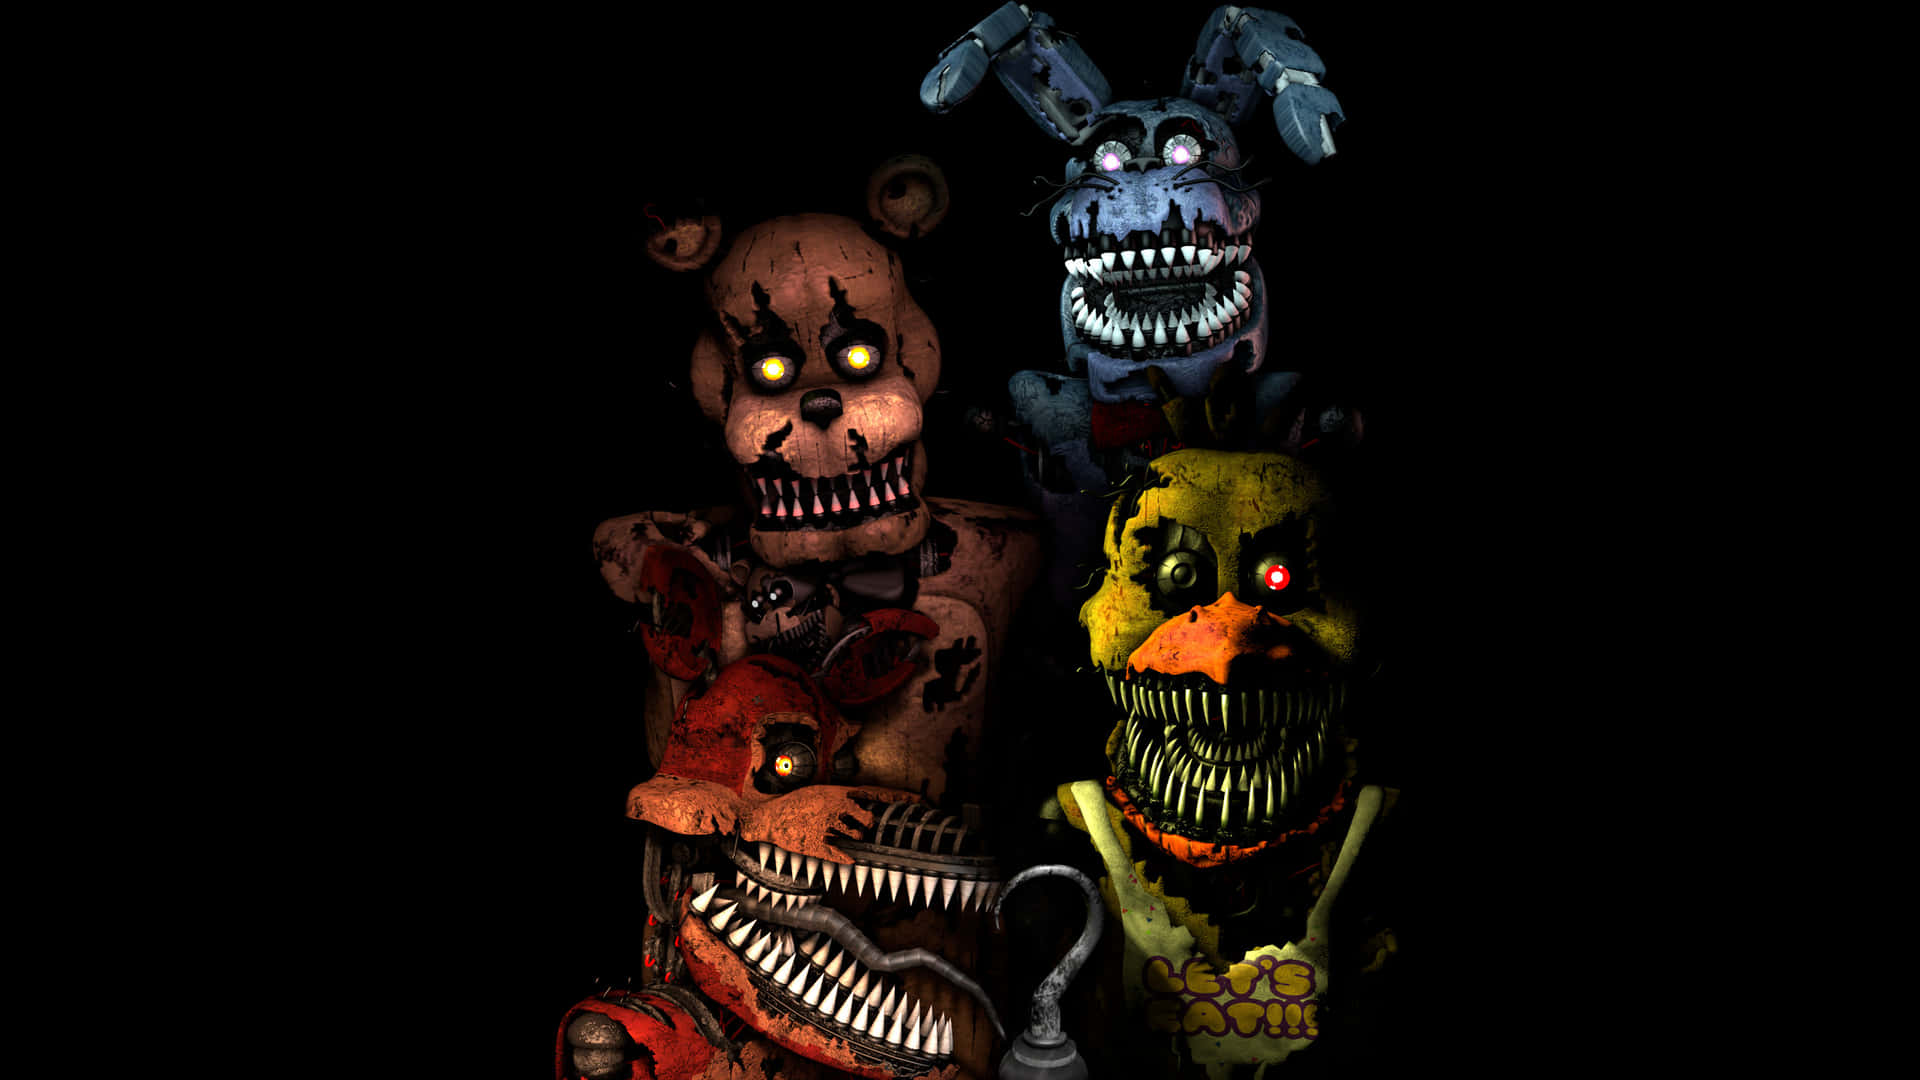 Five Nights At Freddys 4 Nightmares Wallpaper